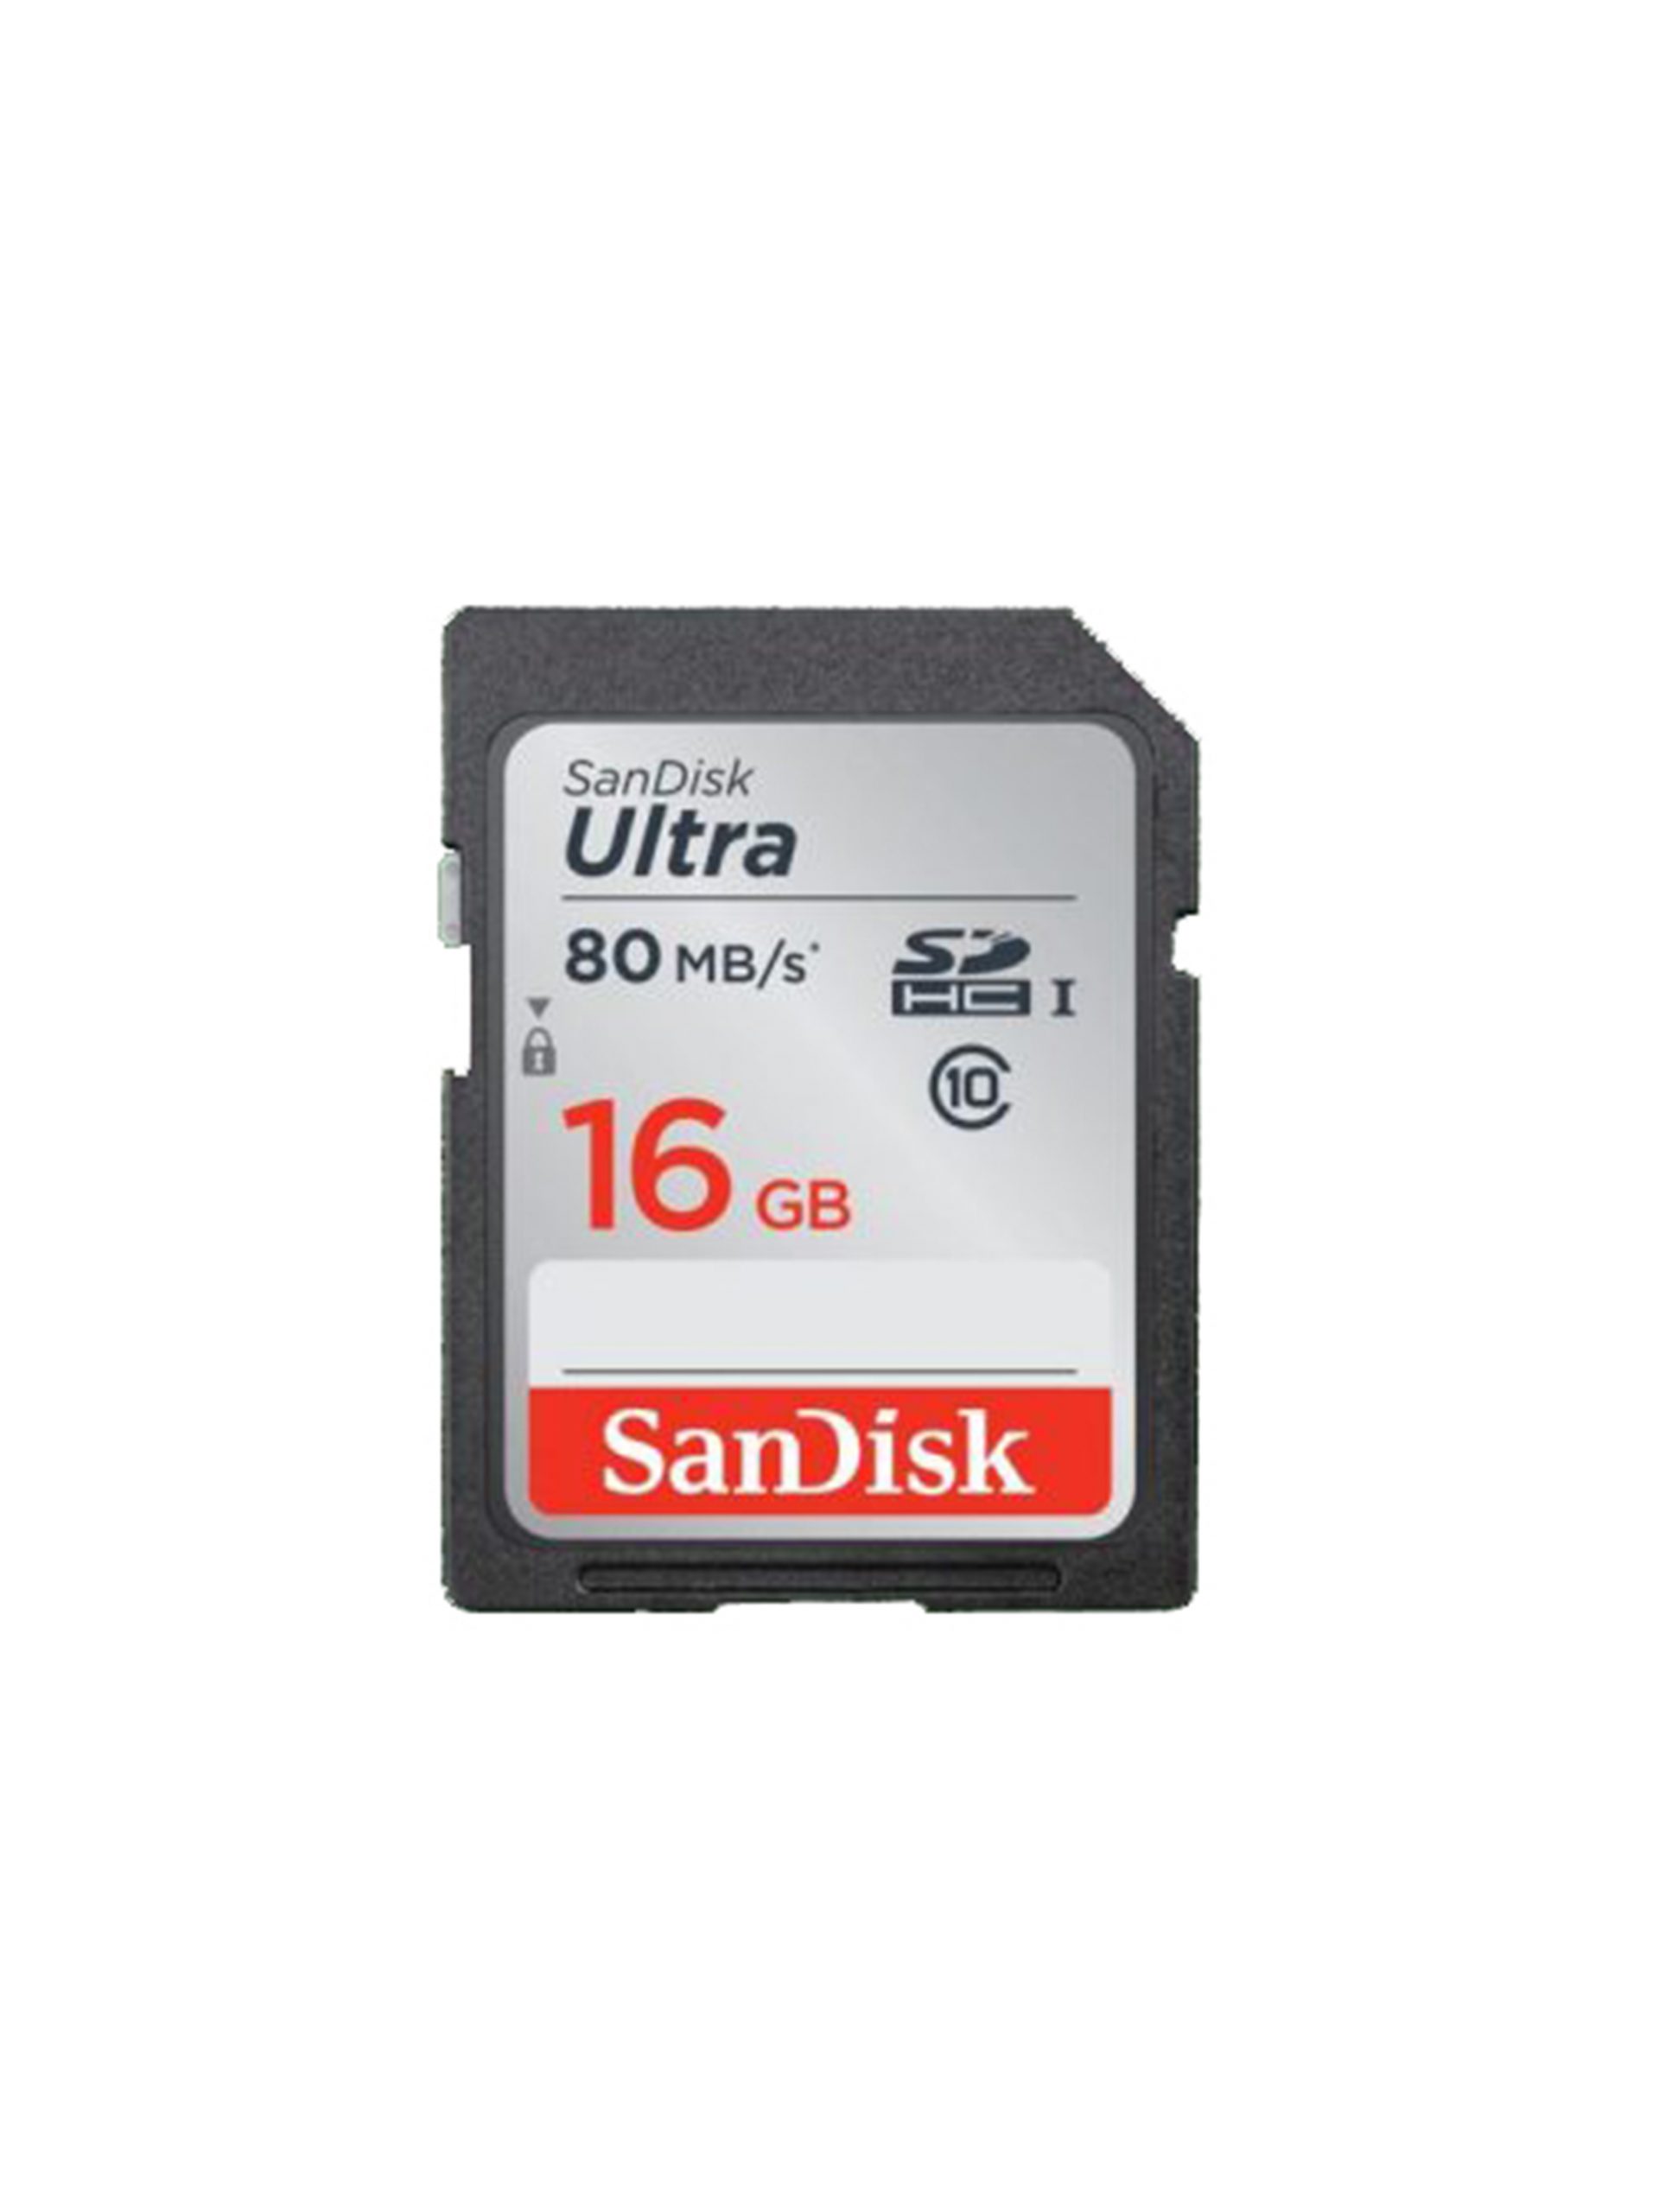 Sandisk SD 16gb Ultra Camera